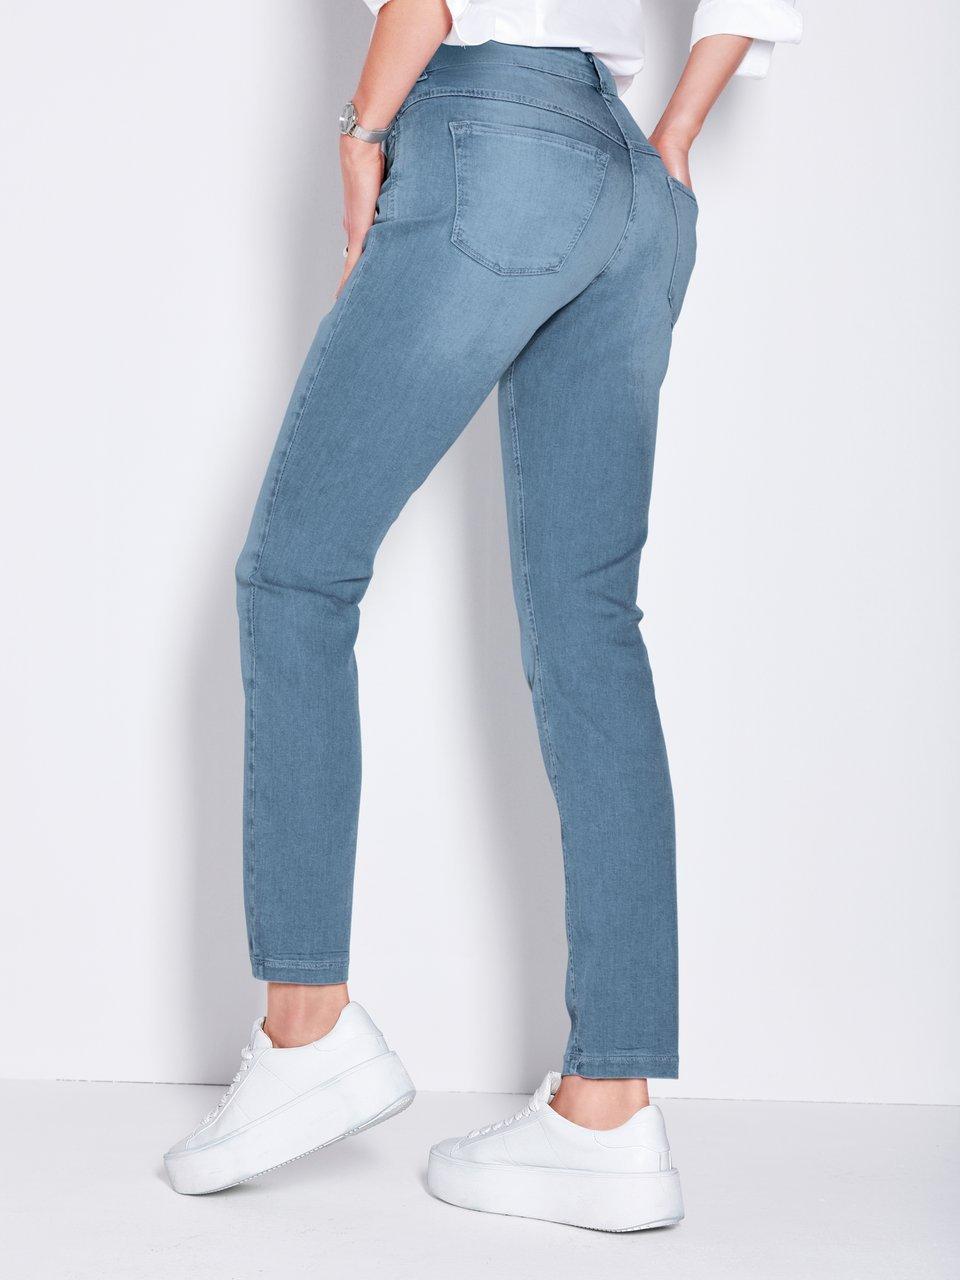 Mac - Le jean modèle Dream Skinny